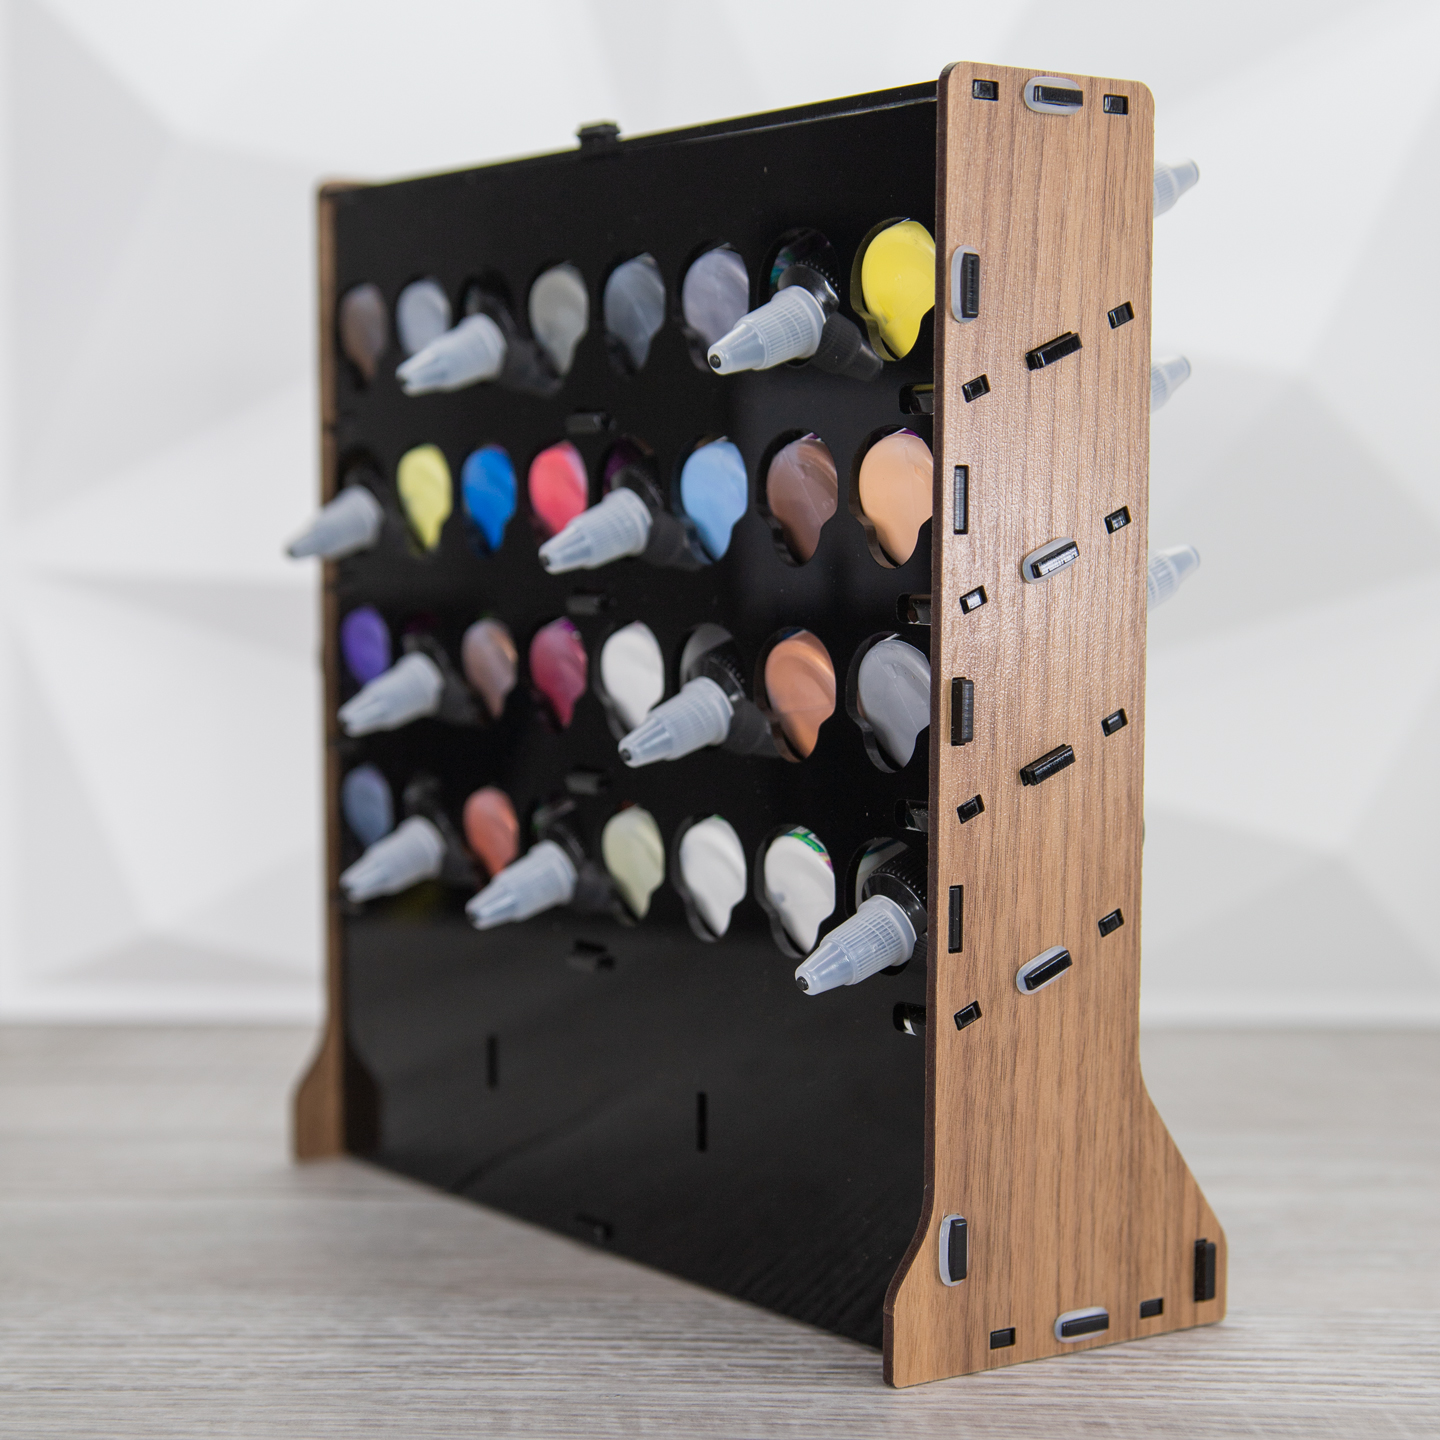 Desk Wizard – Rank 5 Paint Holder – The Miniature Painting Shop